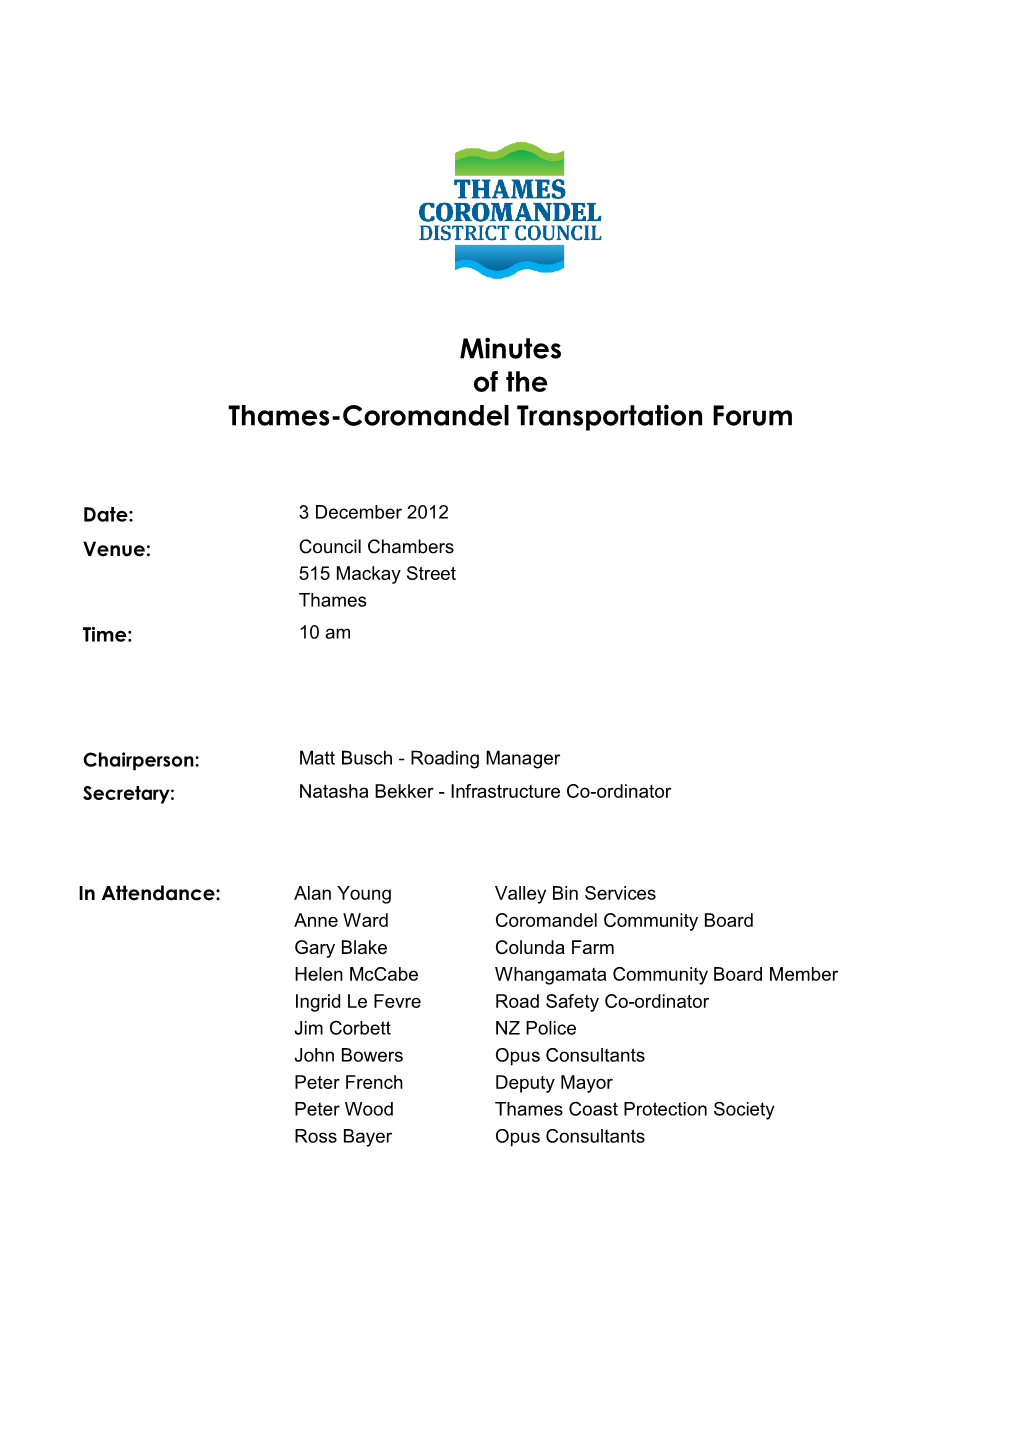 Thames-Coromandel Transportation Forum Minutes 3 December 2012